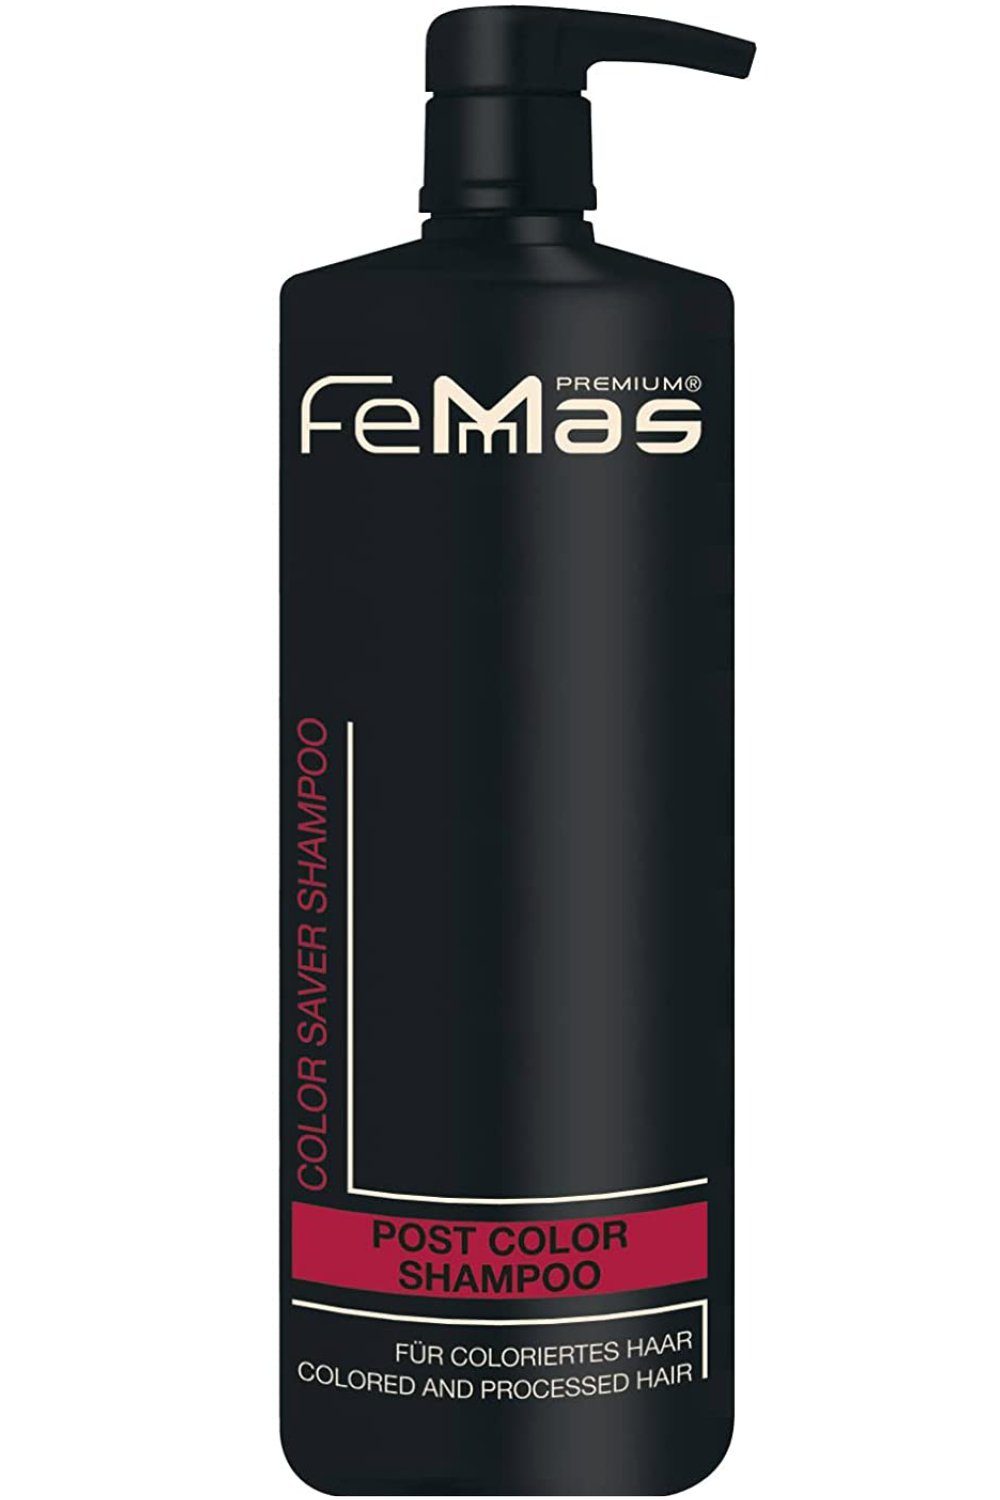 Color Femmas Shampoo inklusive FemMas Premium Saver Dosierpumpe 1000ml Haarshampoo